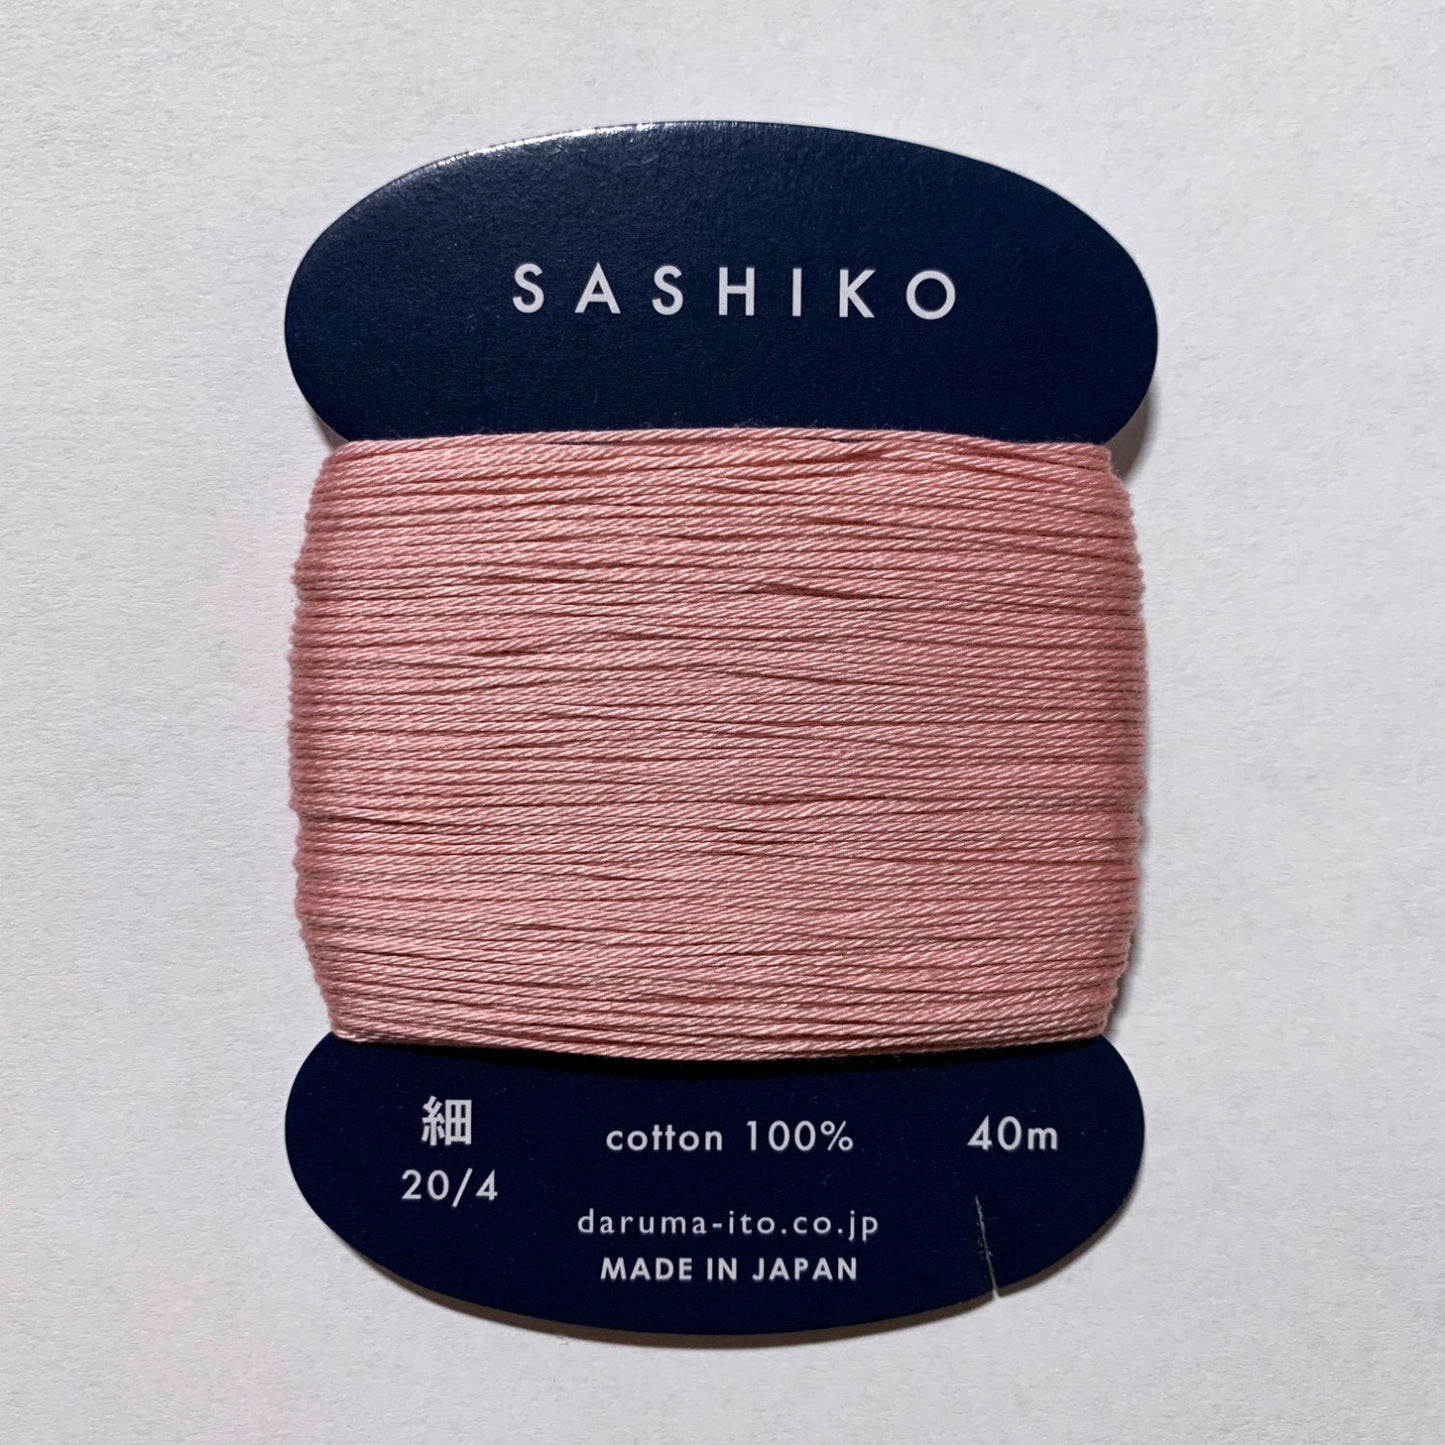 Daruma #211 PLUM BLOSSOM Japanese Cotton SASHIKO thread 40 meter card 20/4 こうばい blossom pink